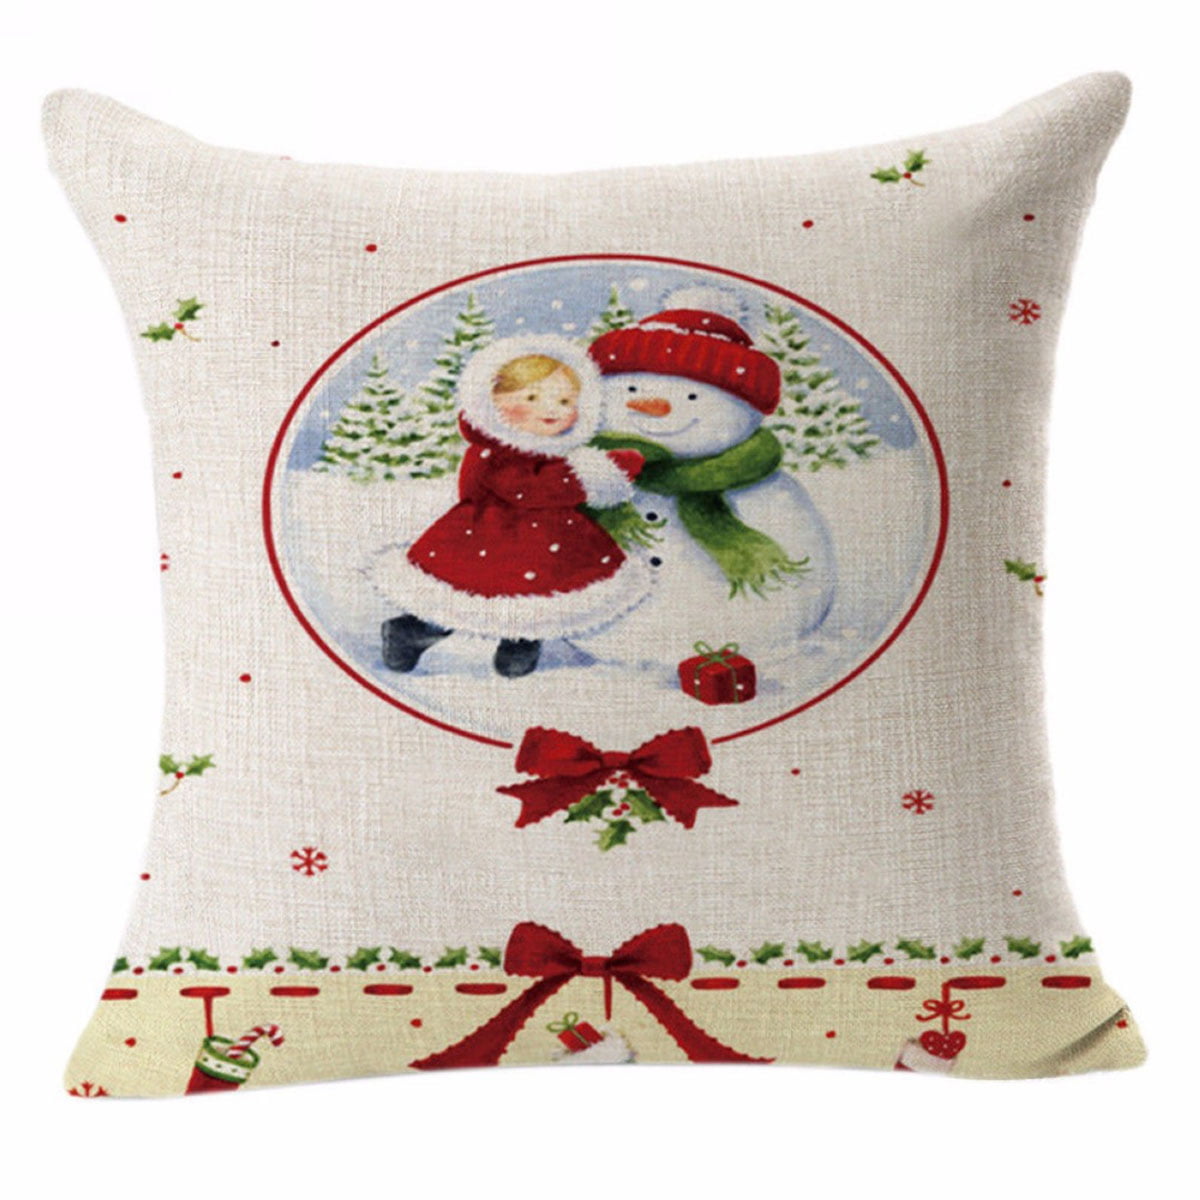 18" Red Christmas Pillow Case Festive Gift Throw Cushion Cover Xmas Home Decor 